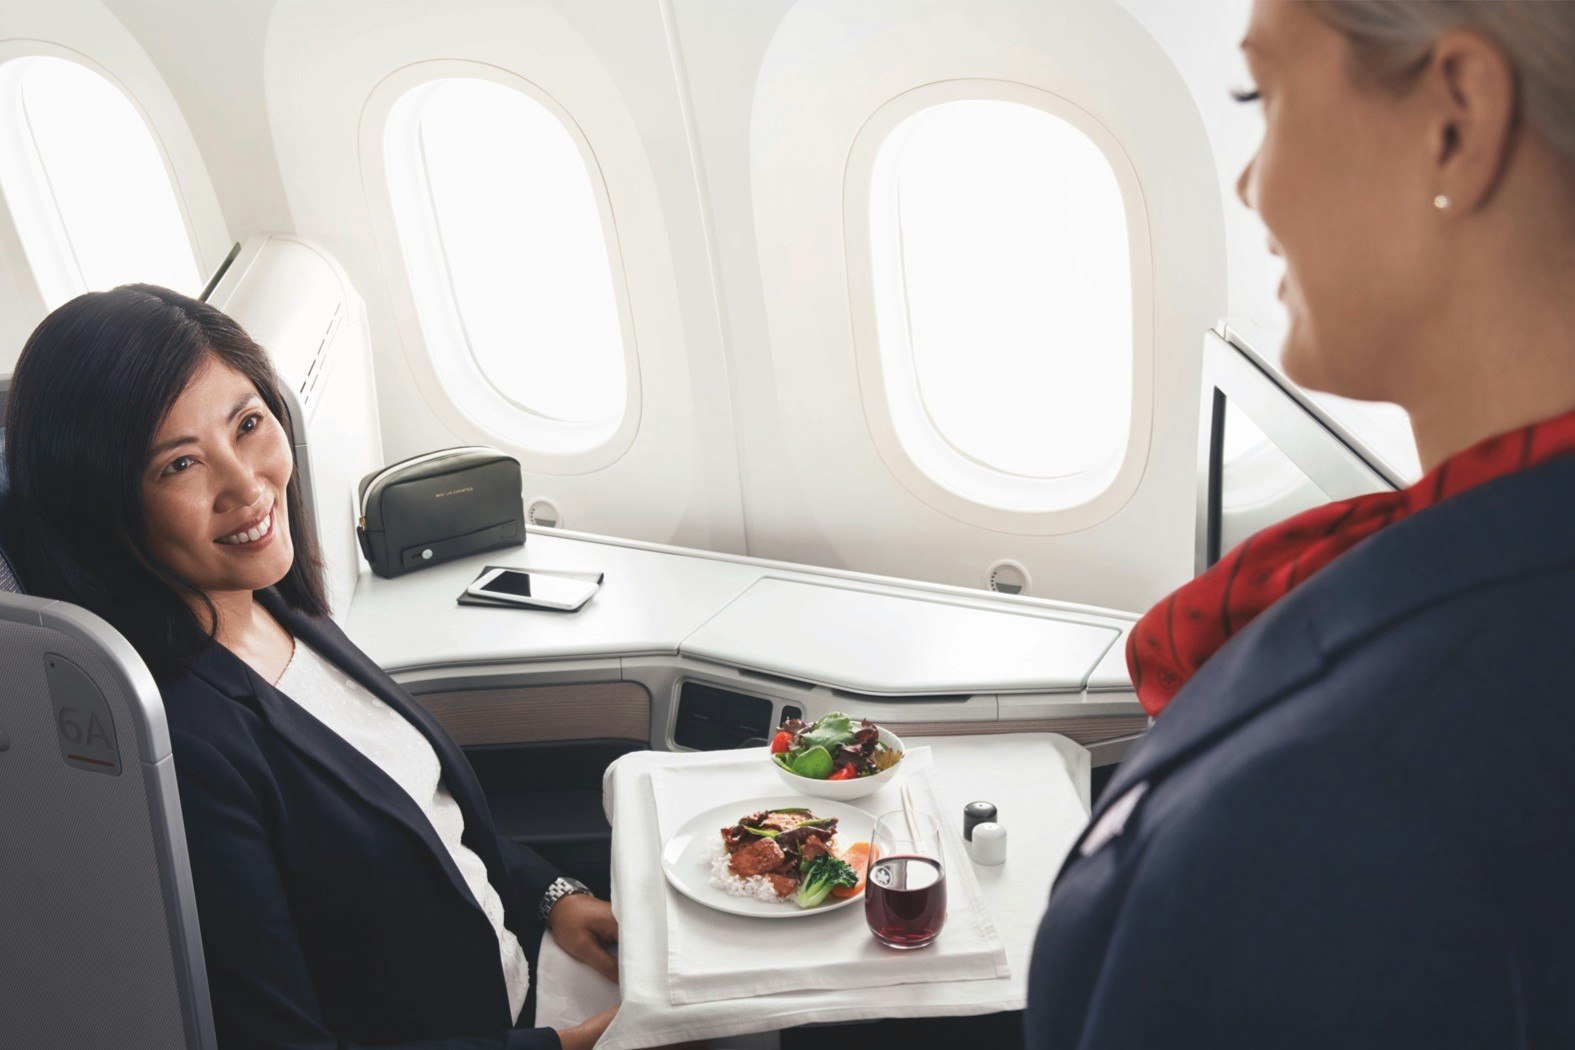 An Air Canada hostess serving a meal to a female passenger